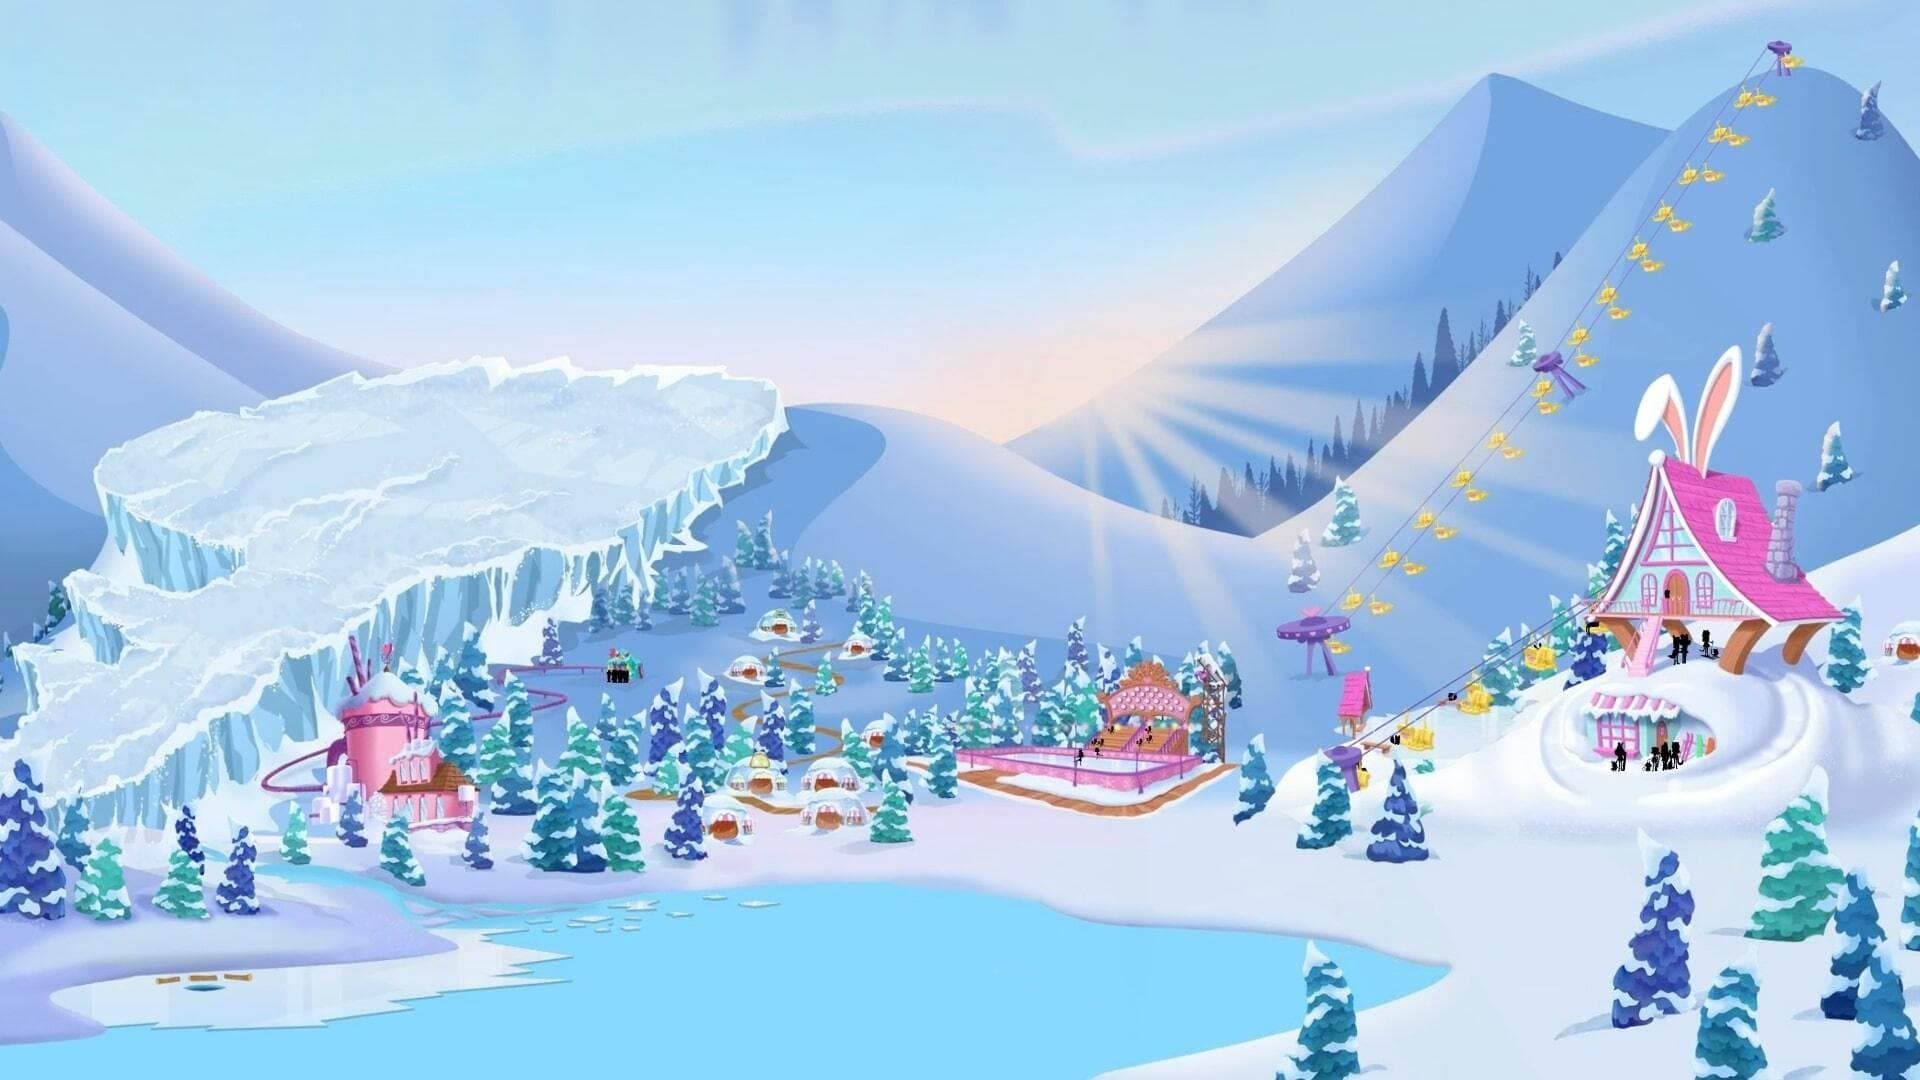 Enchantimals: Secrets of Snowy Valley background